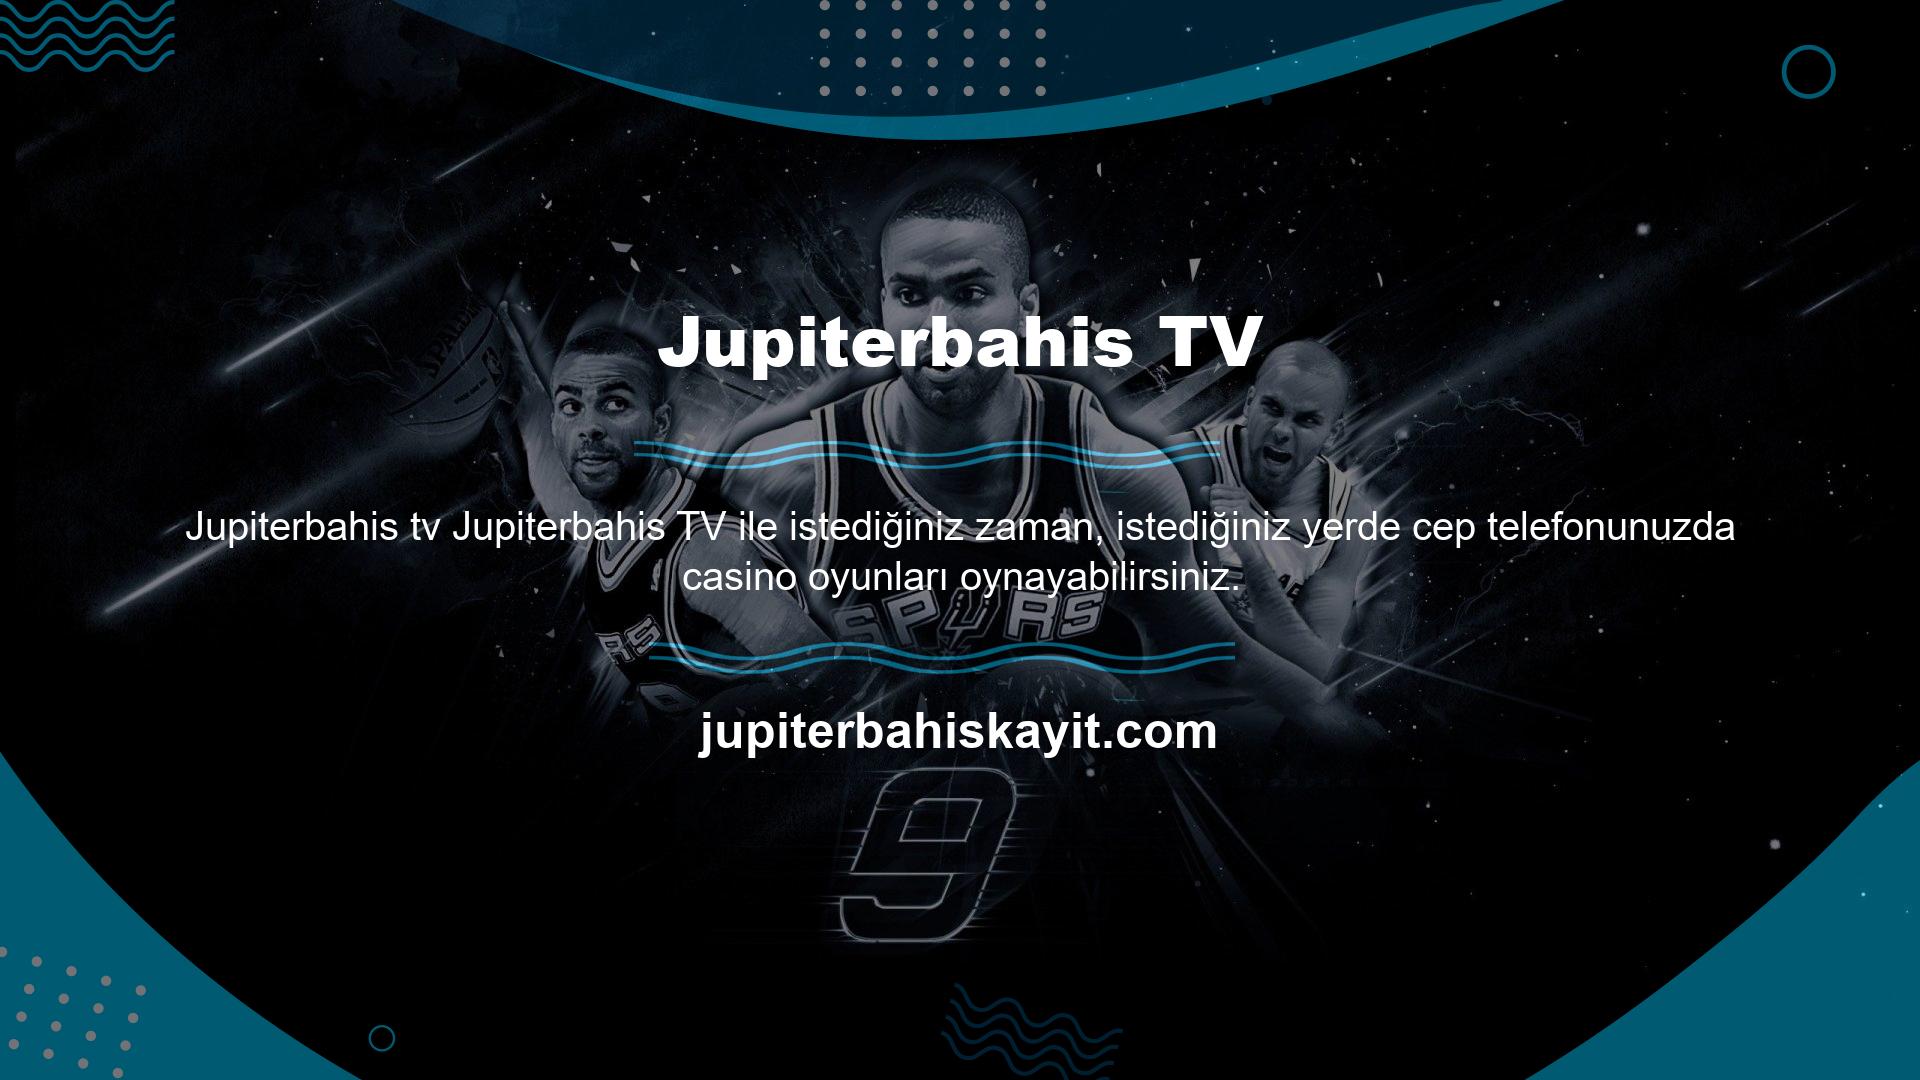 Jupiterbahis TV